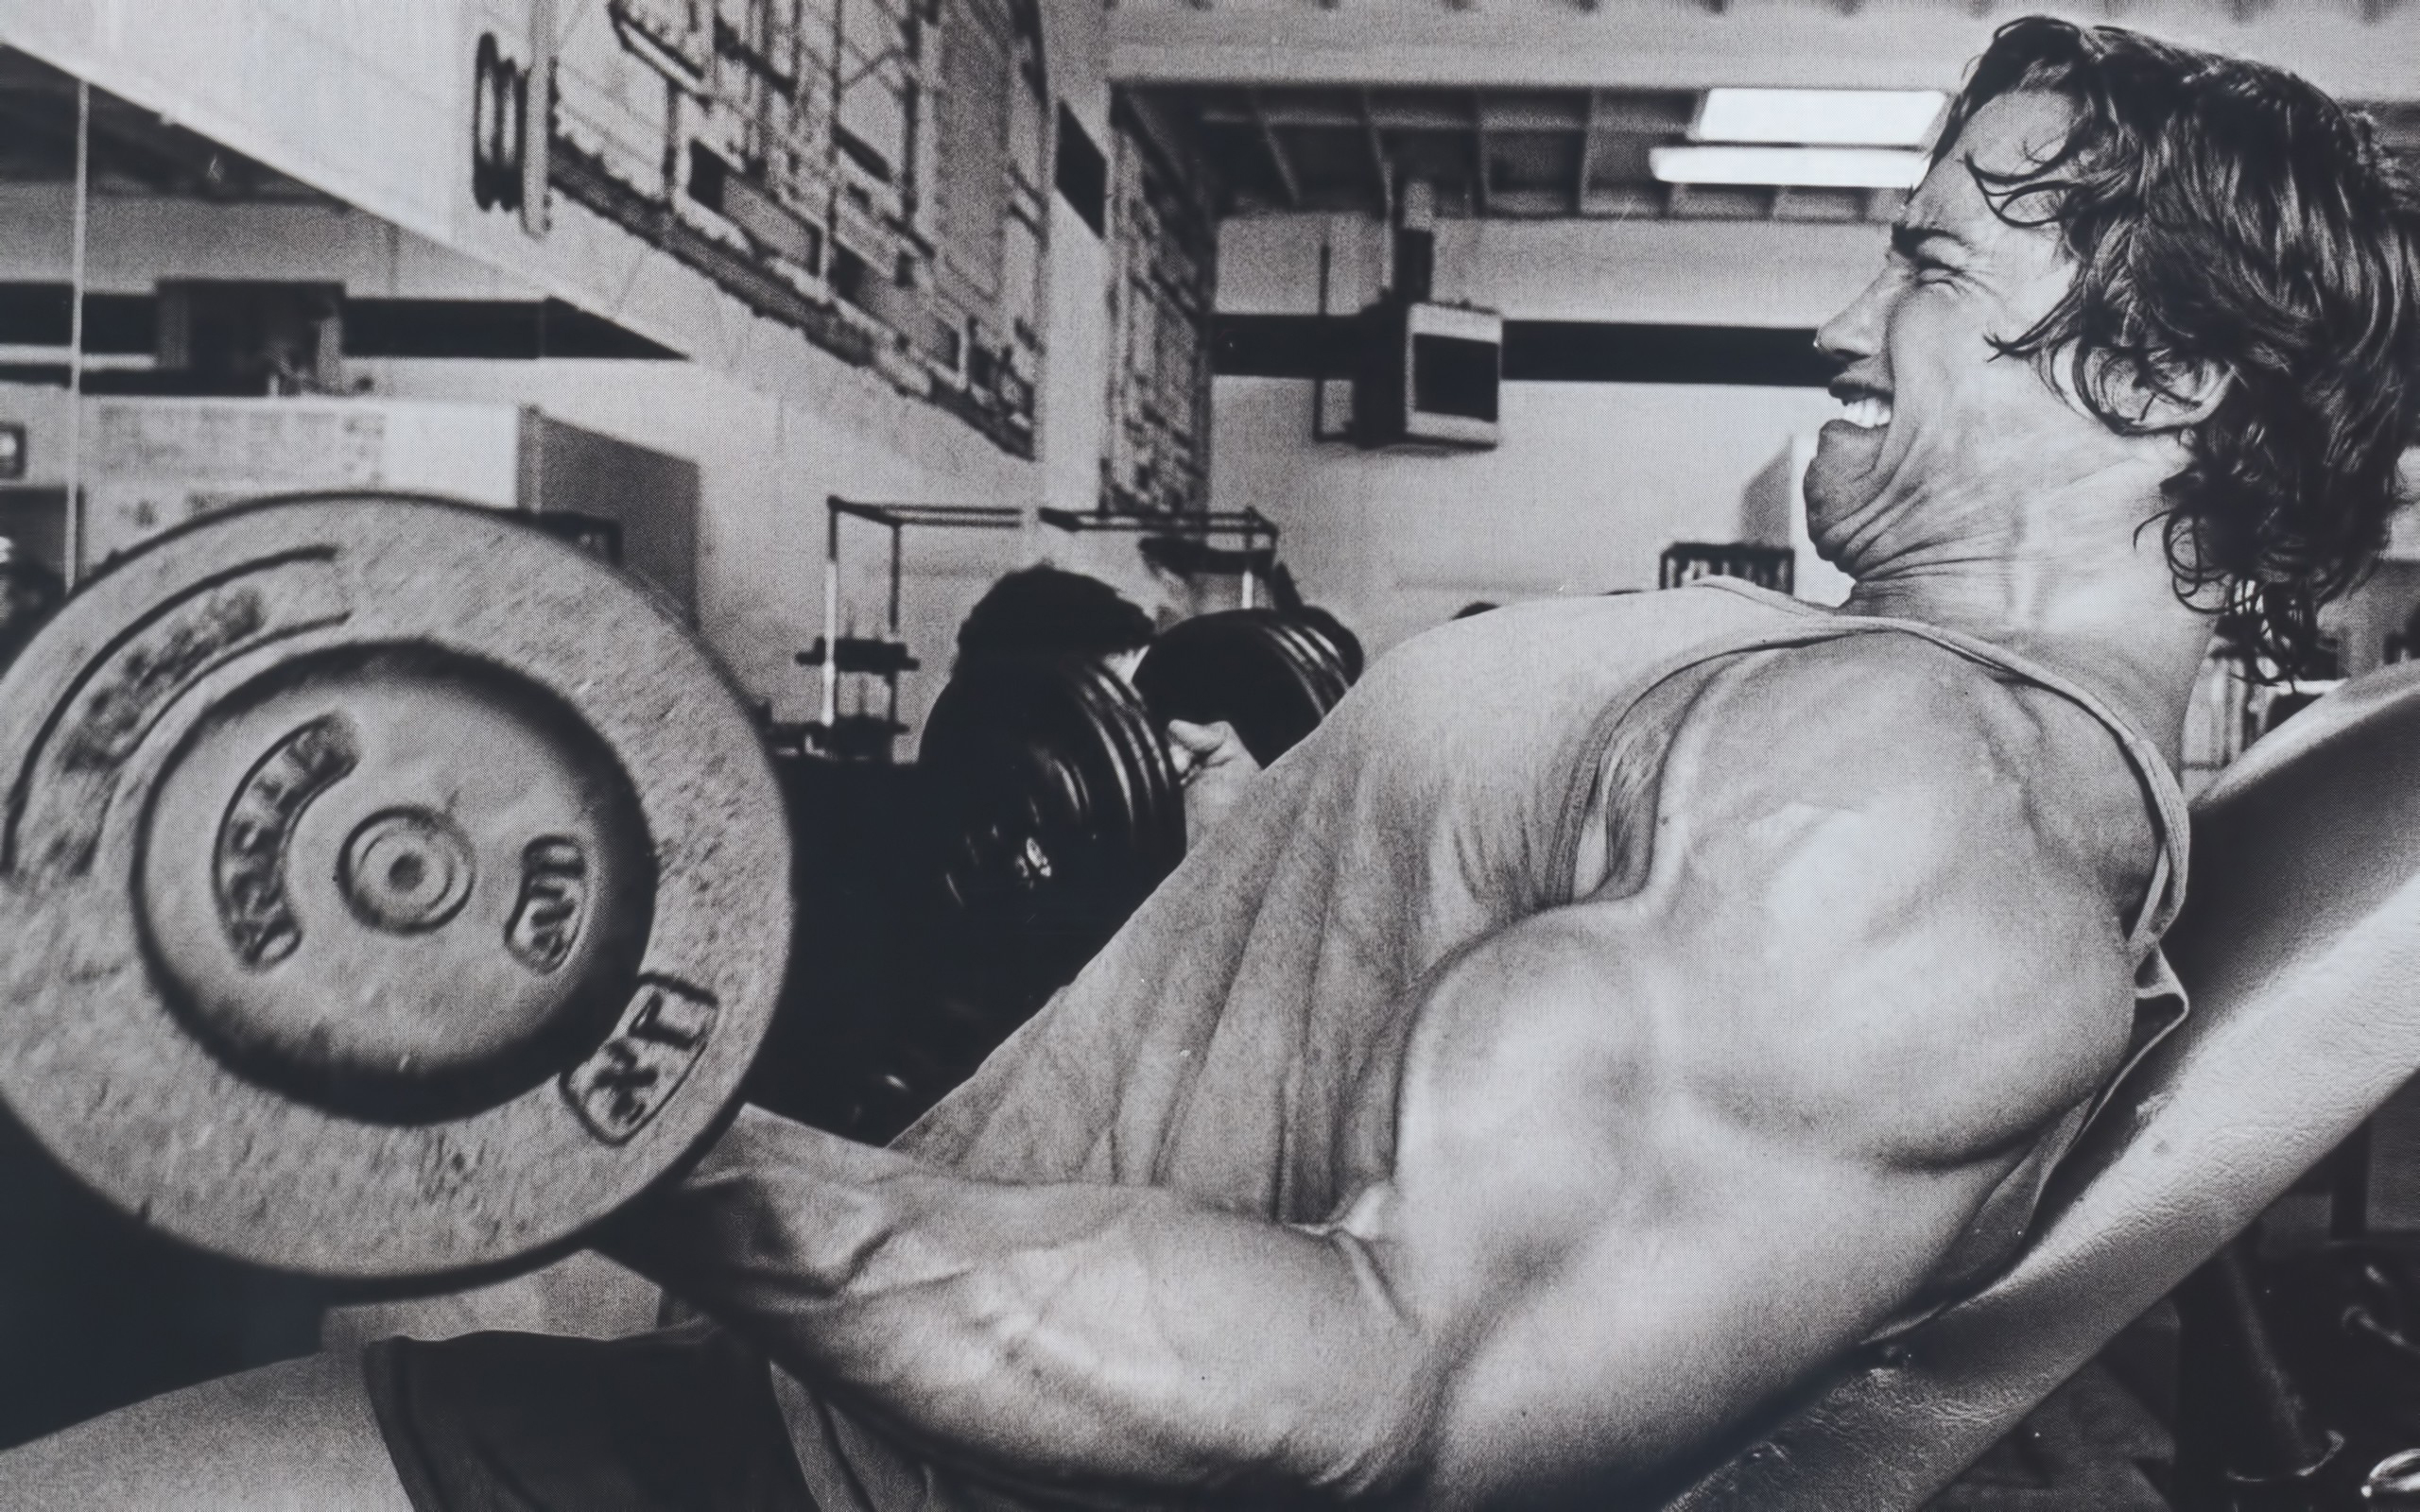 Schwarzenegger training pain